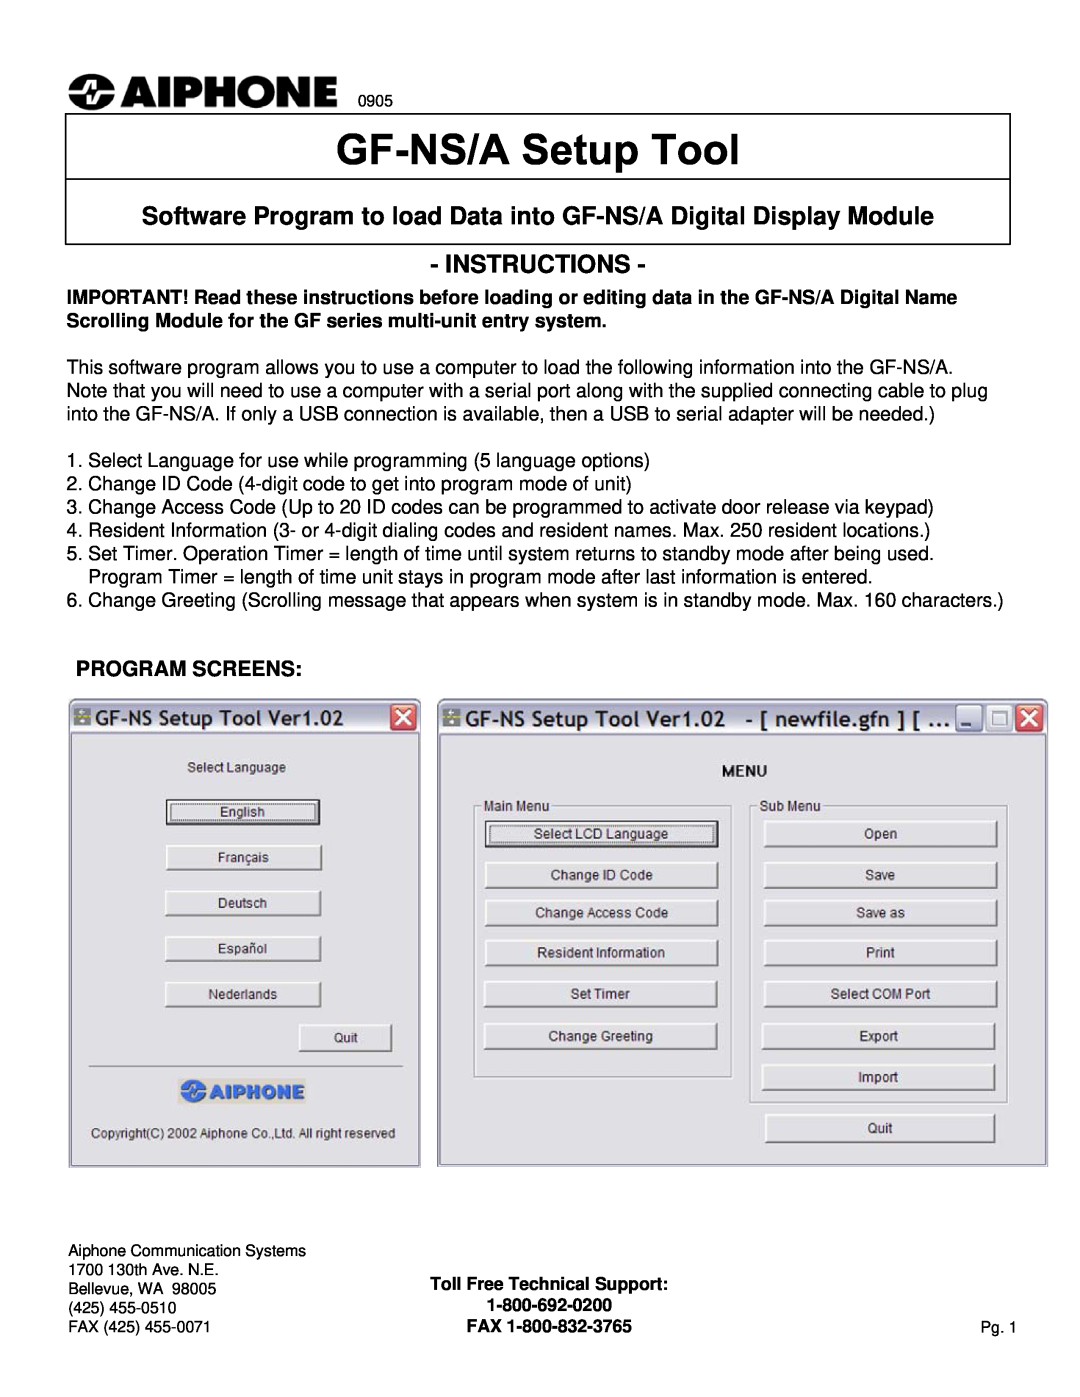 Aiphone manual Program Screens, Software Program to load Data into GF-NS/A Digital Display Module, Instructions 